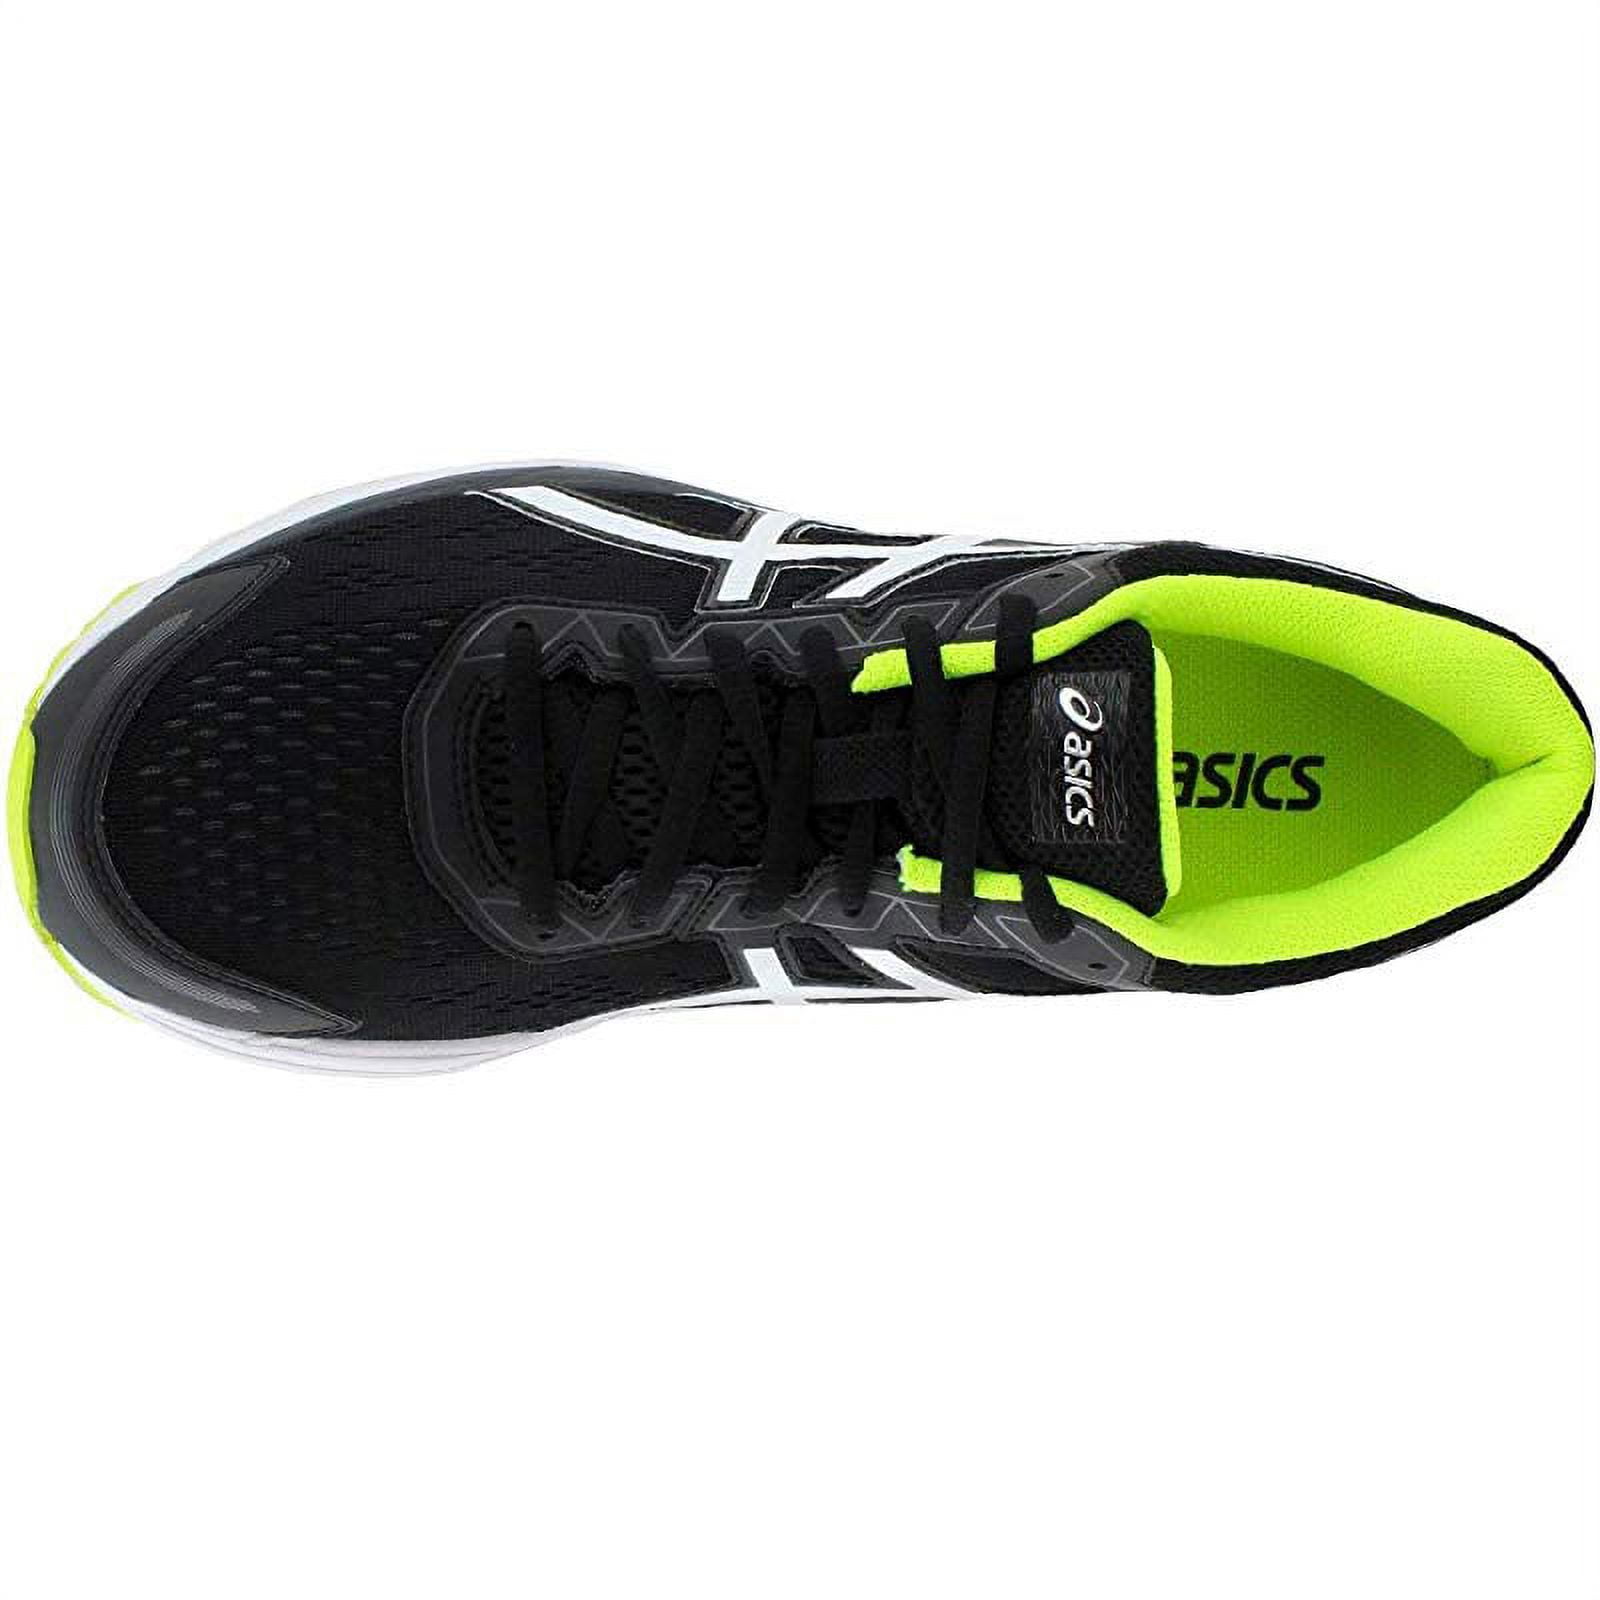 Asics - Gel Fortitude 7 - Athletic Shoe Shop